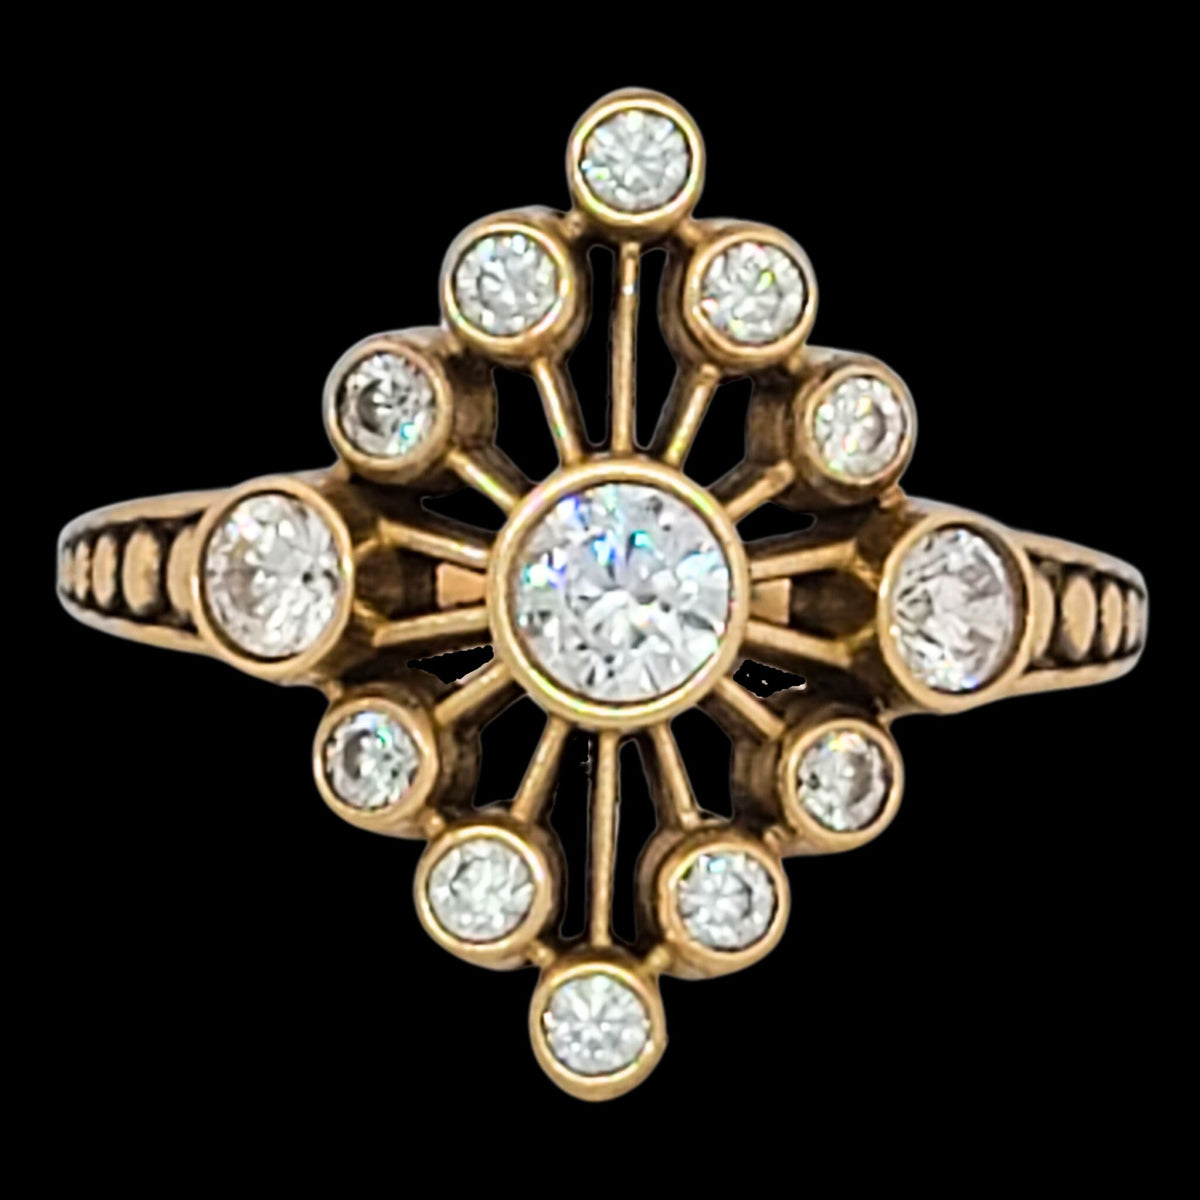 ATOMIC DIAMOND SOLITAIRE WEDDING, ENGAGEMENT OR STATEMENT RING - Starting at $1199